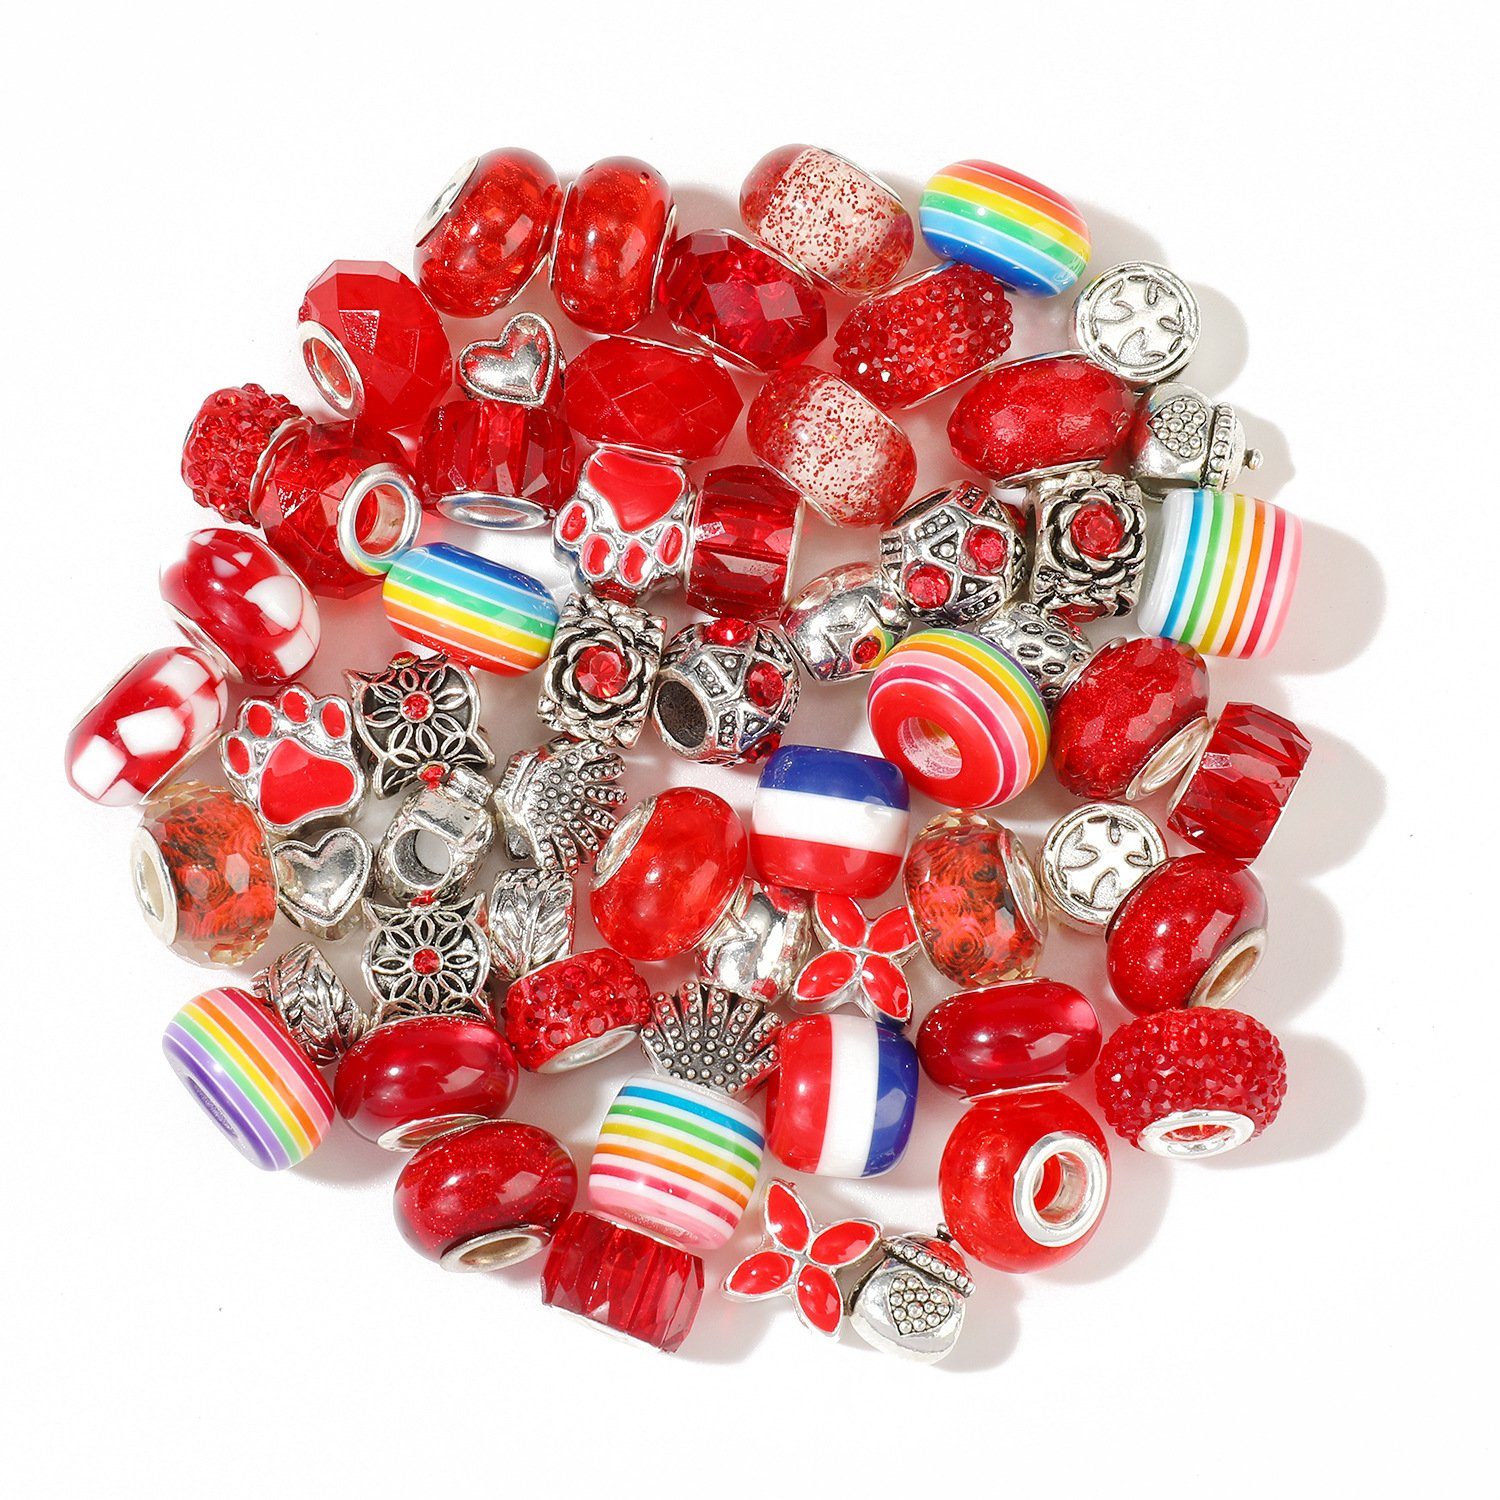 Kopper-24 Bastelperlen Großlochperlen Glasperlen Charm Mix mit 60 Perlen, Rot